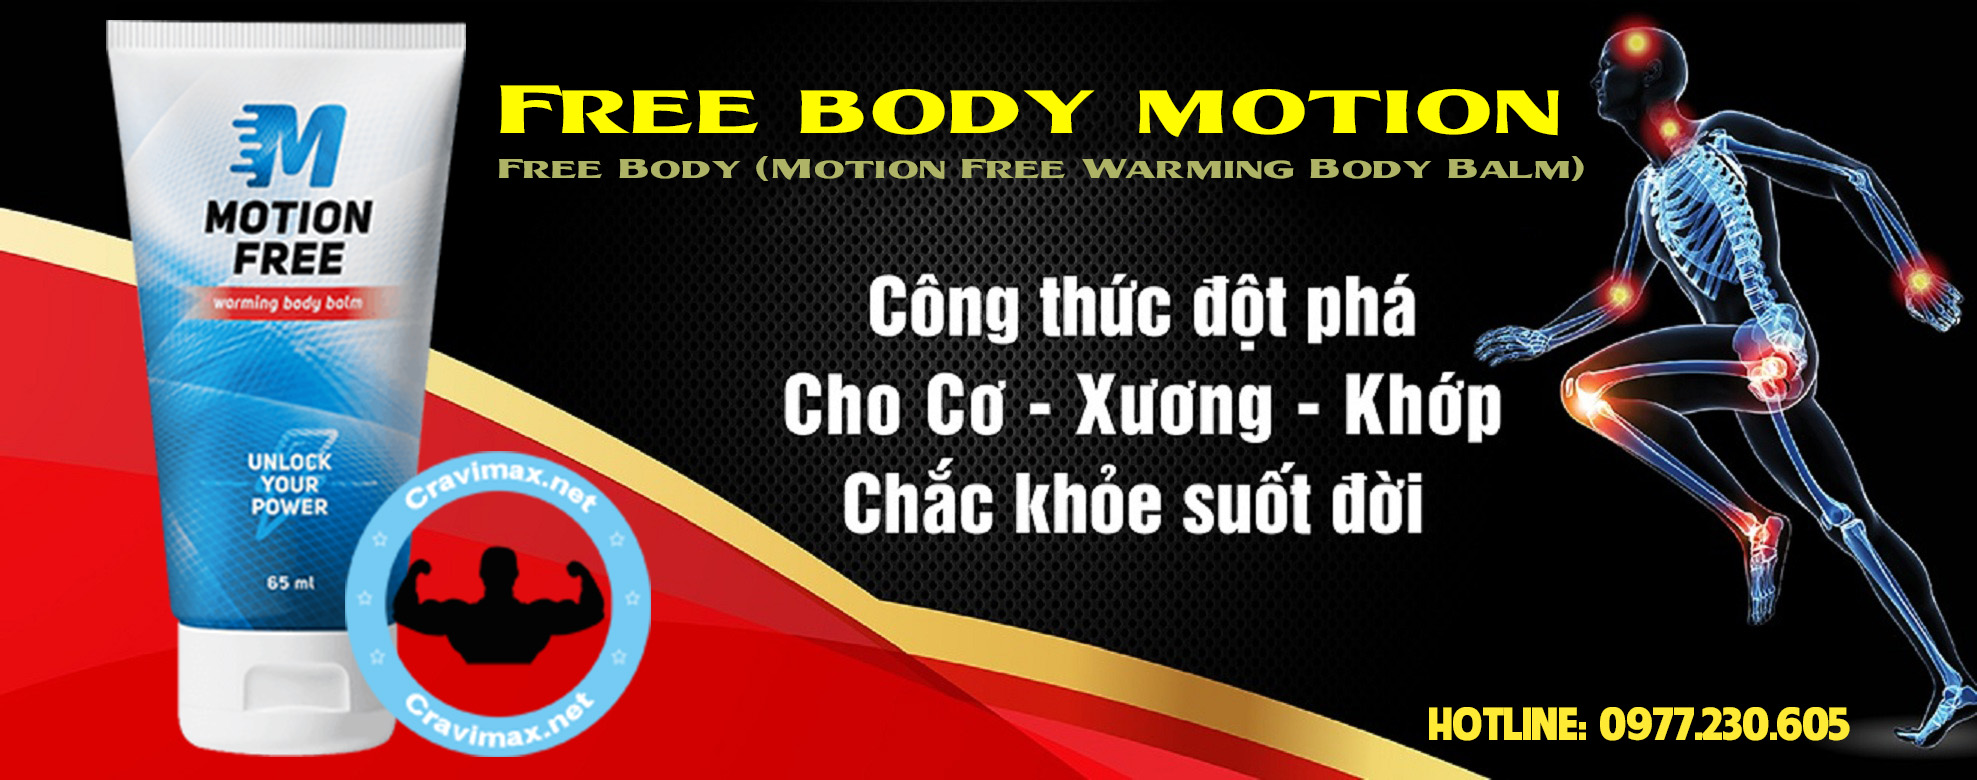 giới thiệu kem Free Body Motion